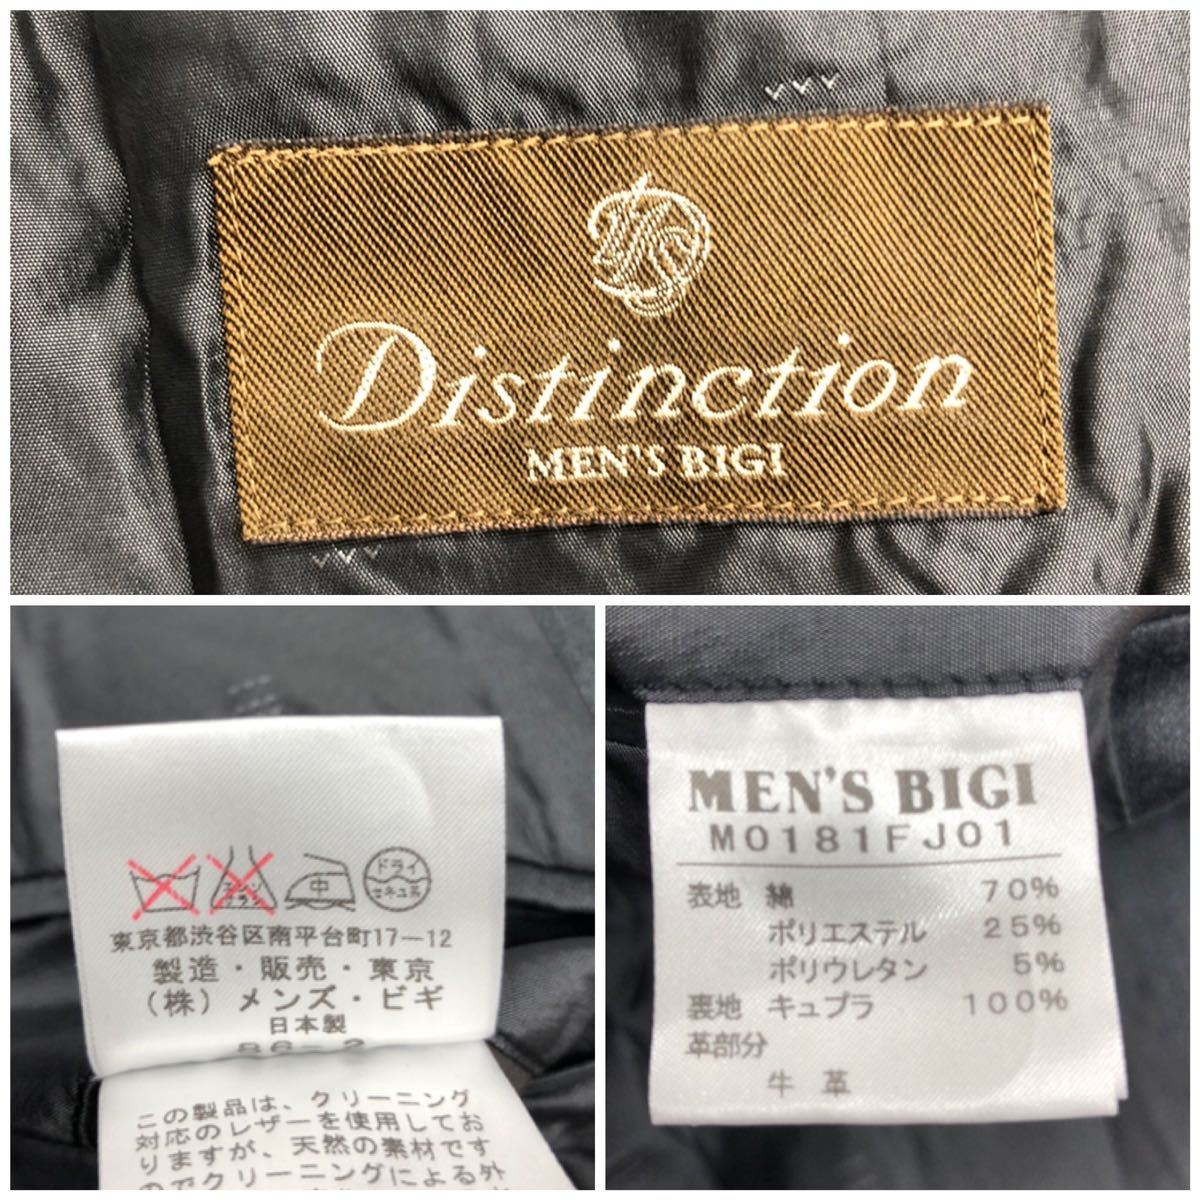 DISTINCTION MEN'S BIGIディスティンクション メンズビギ てテーラードジャケット 背抜き 3ボタン ダークグレー 01サイズ S-M相当 紳士の画像10